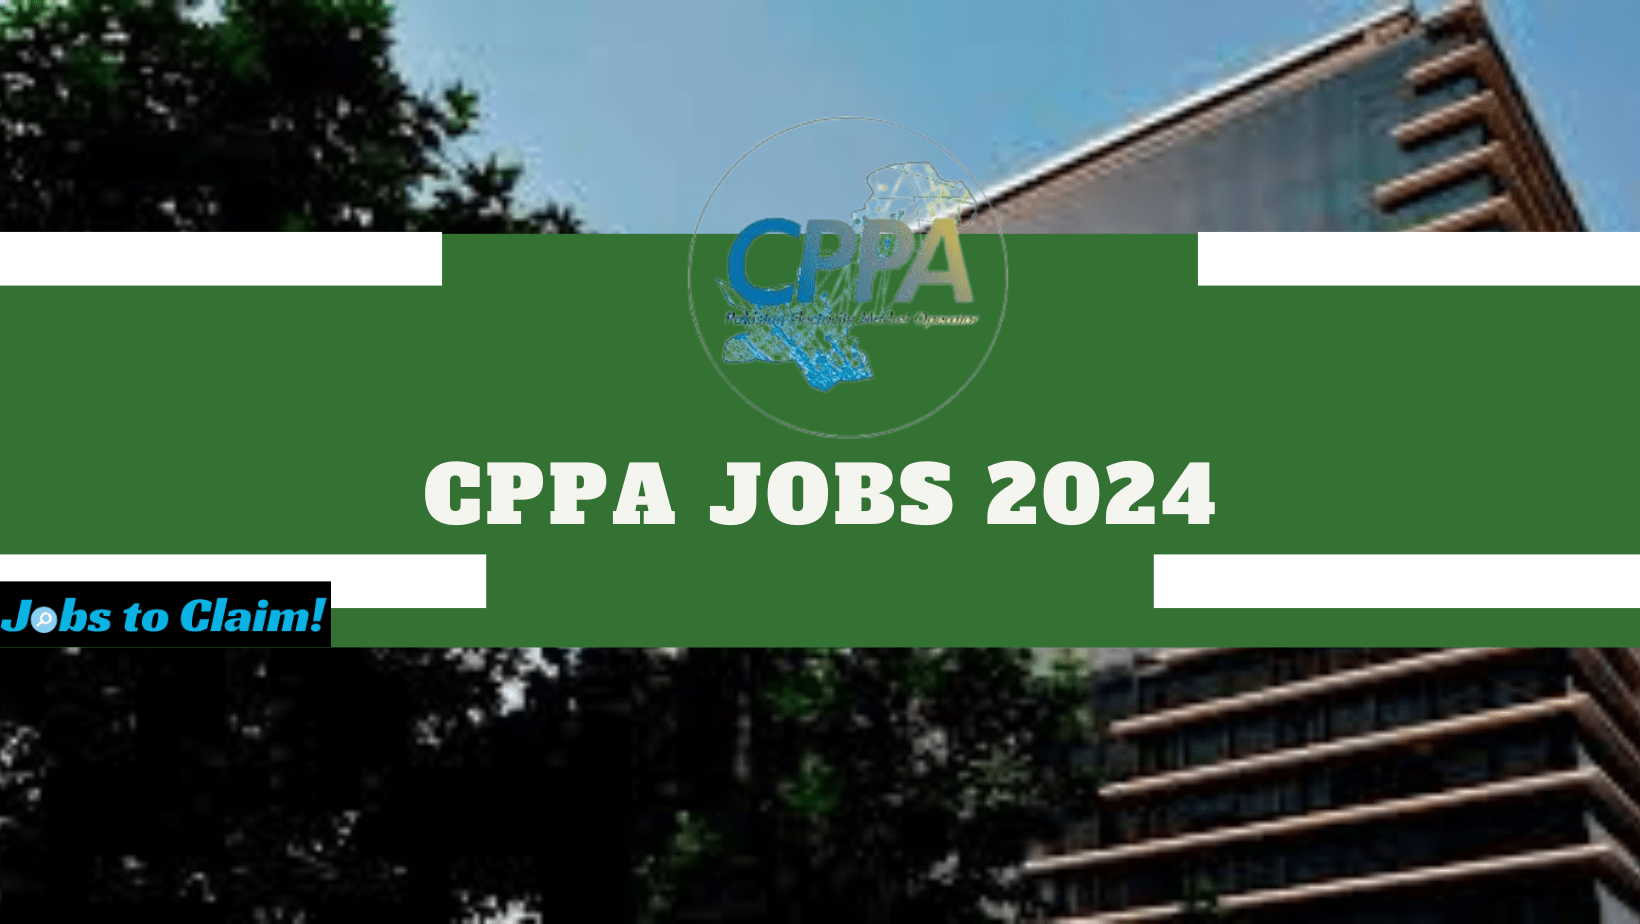 CPPA jobs